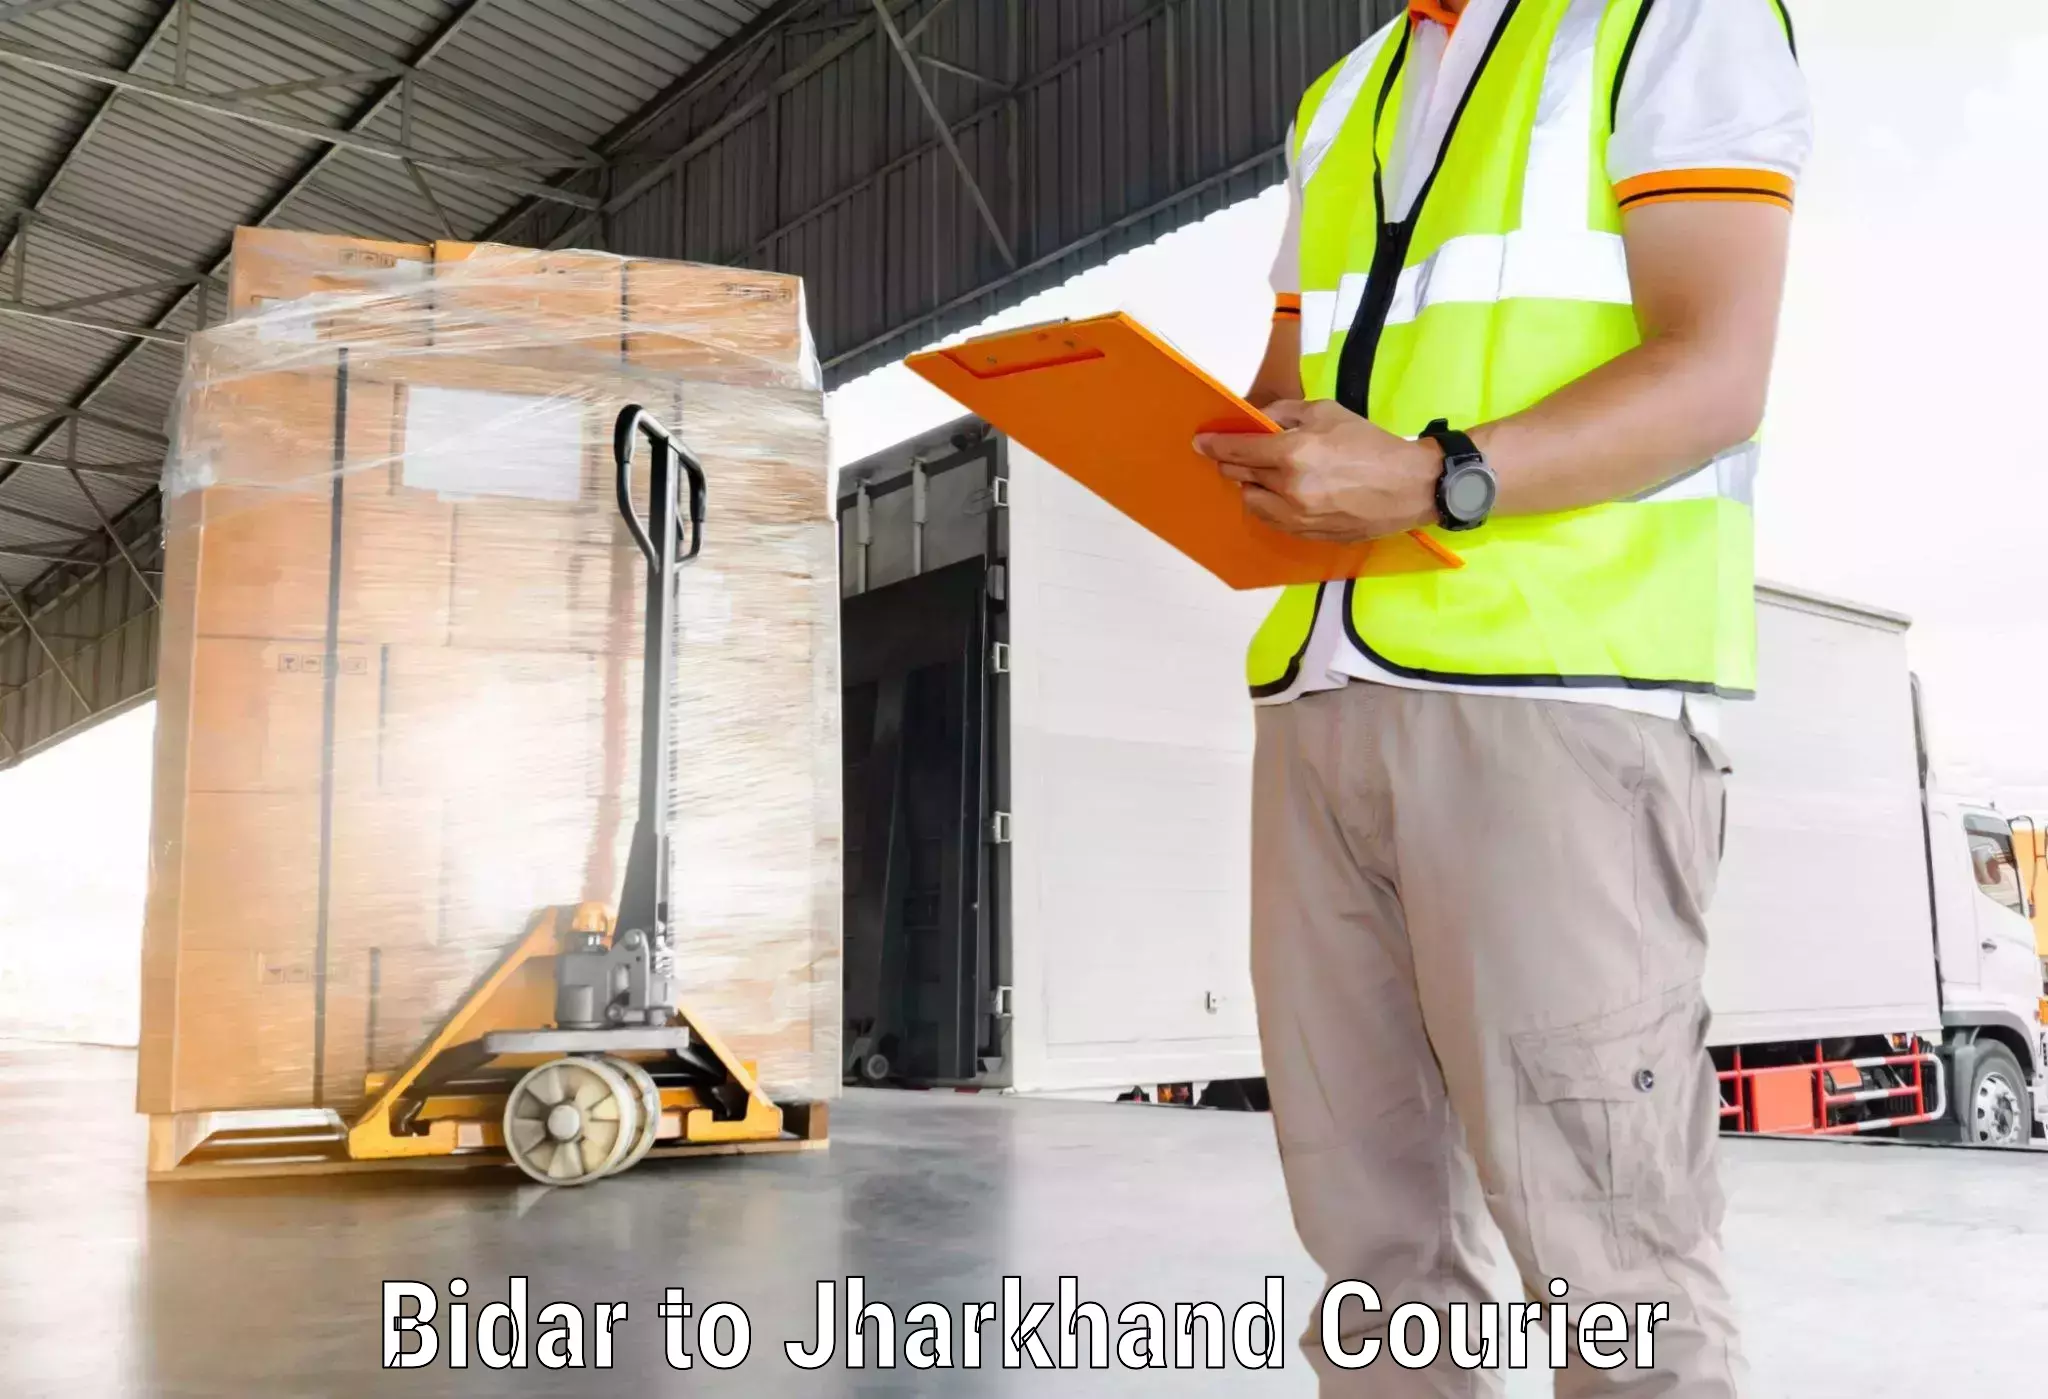 Logistics management Bidar to Dhanbad